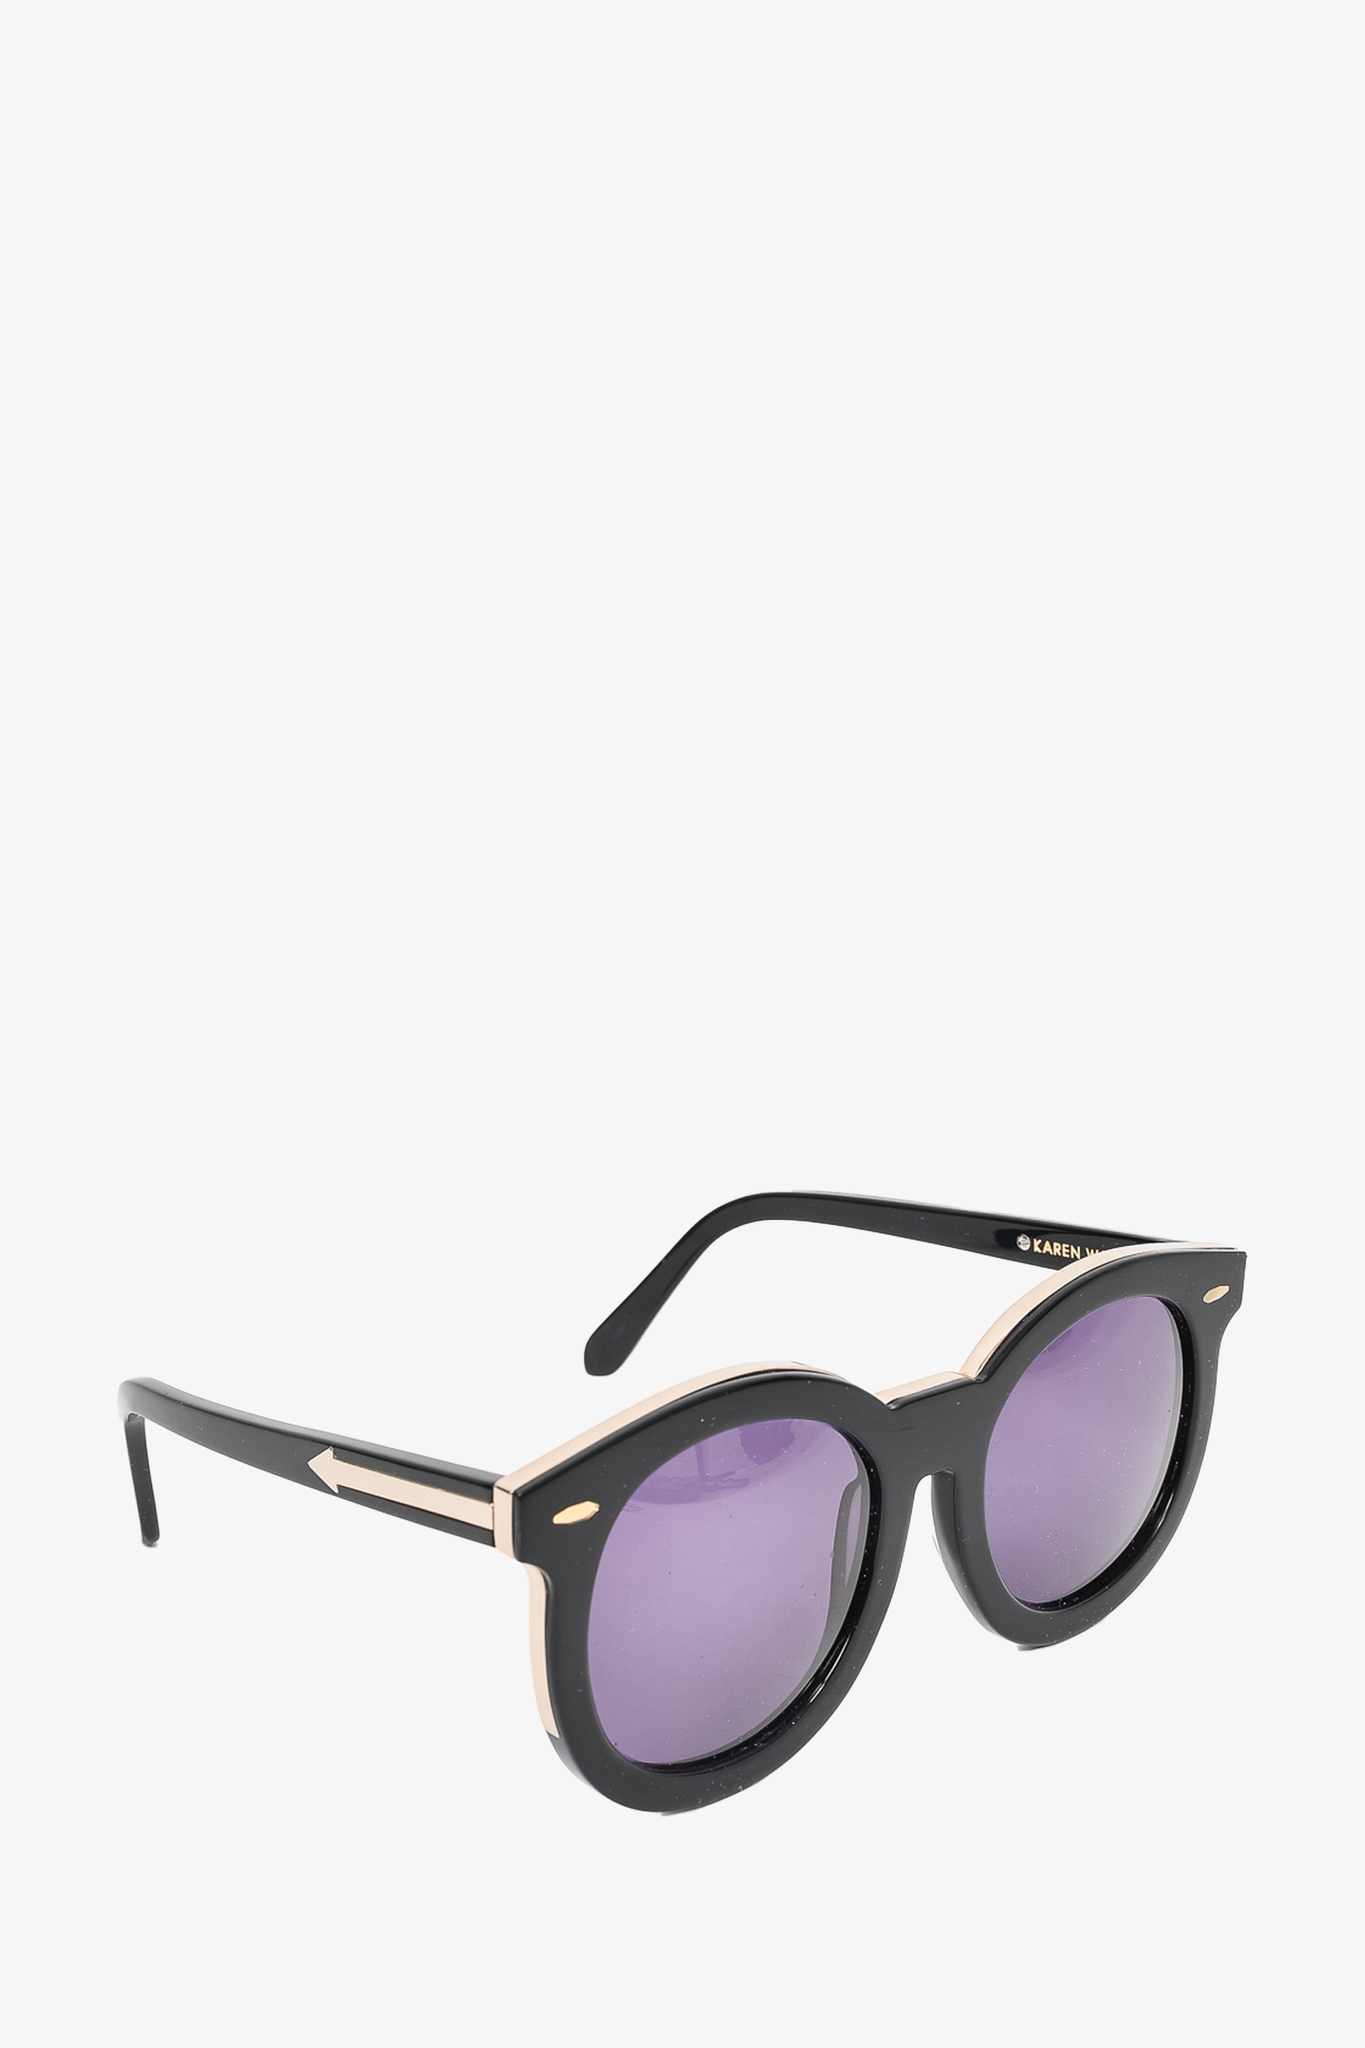 Karen Walker Black Sunglasses w/ Gold Arrow Sides